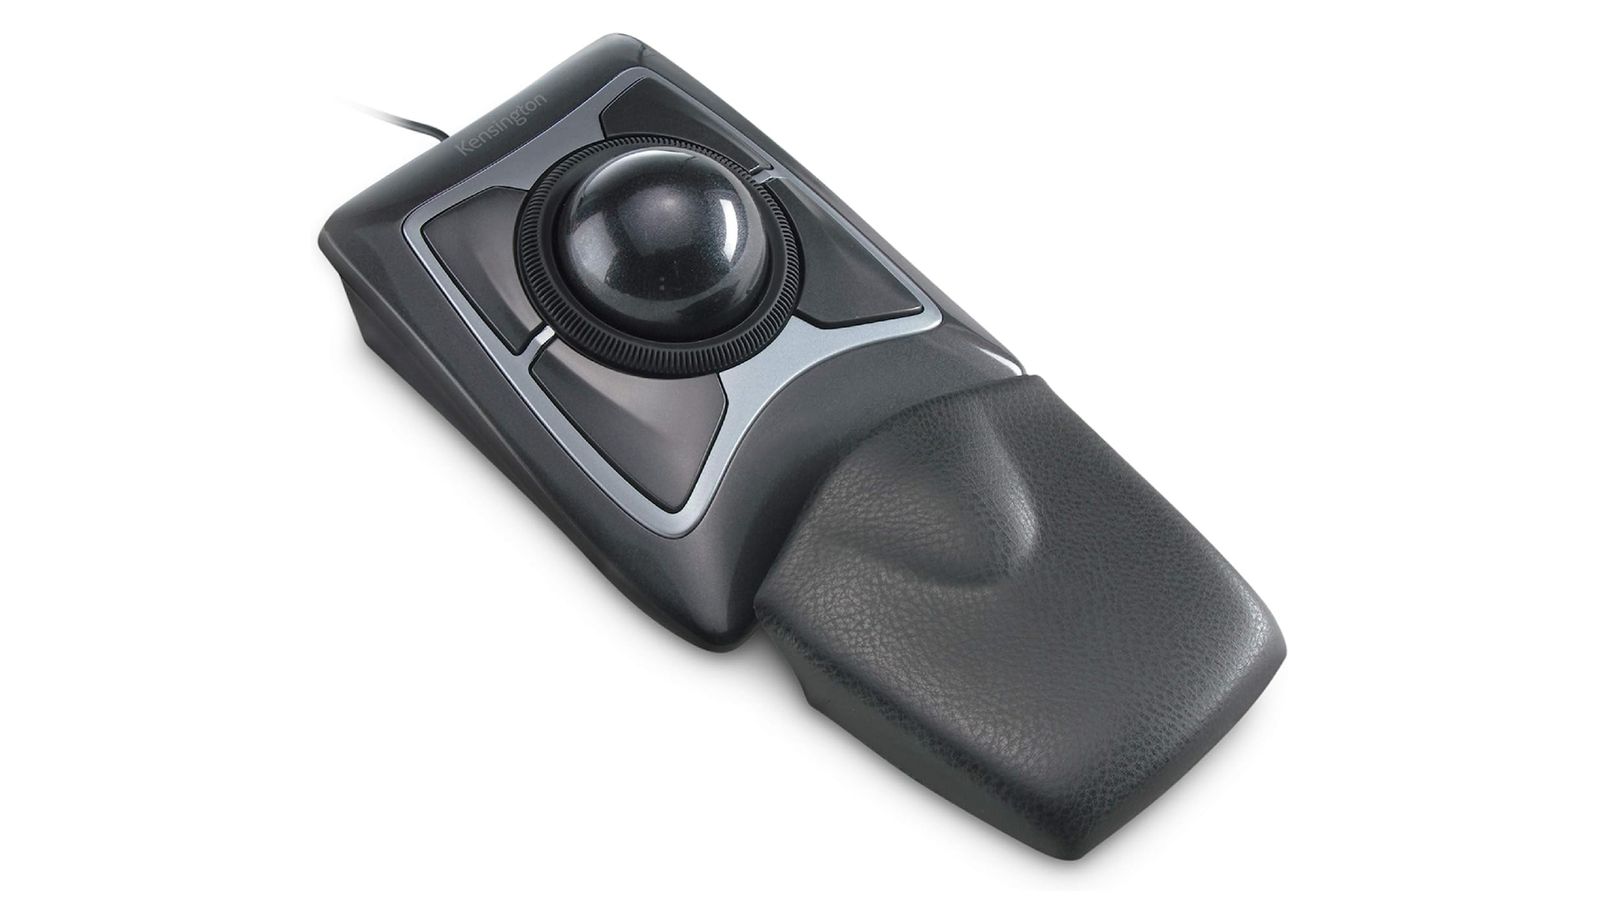 Kensington Expert Mouse product image of a dark grey, rectagular trackball mouse.